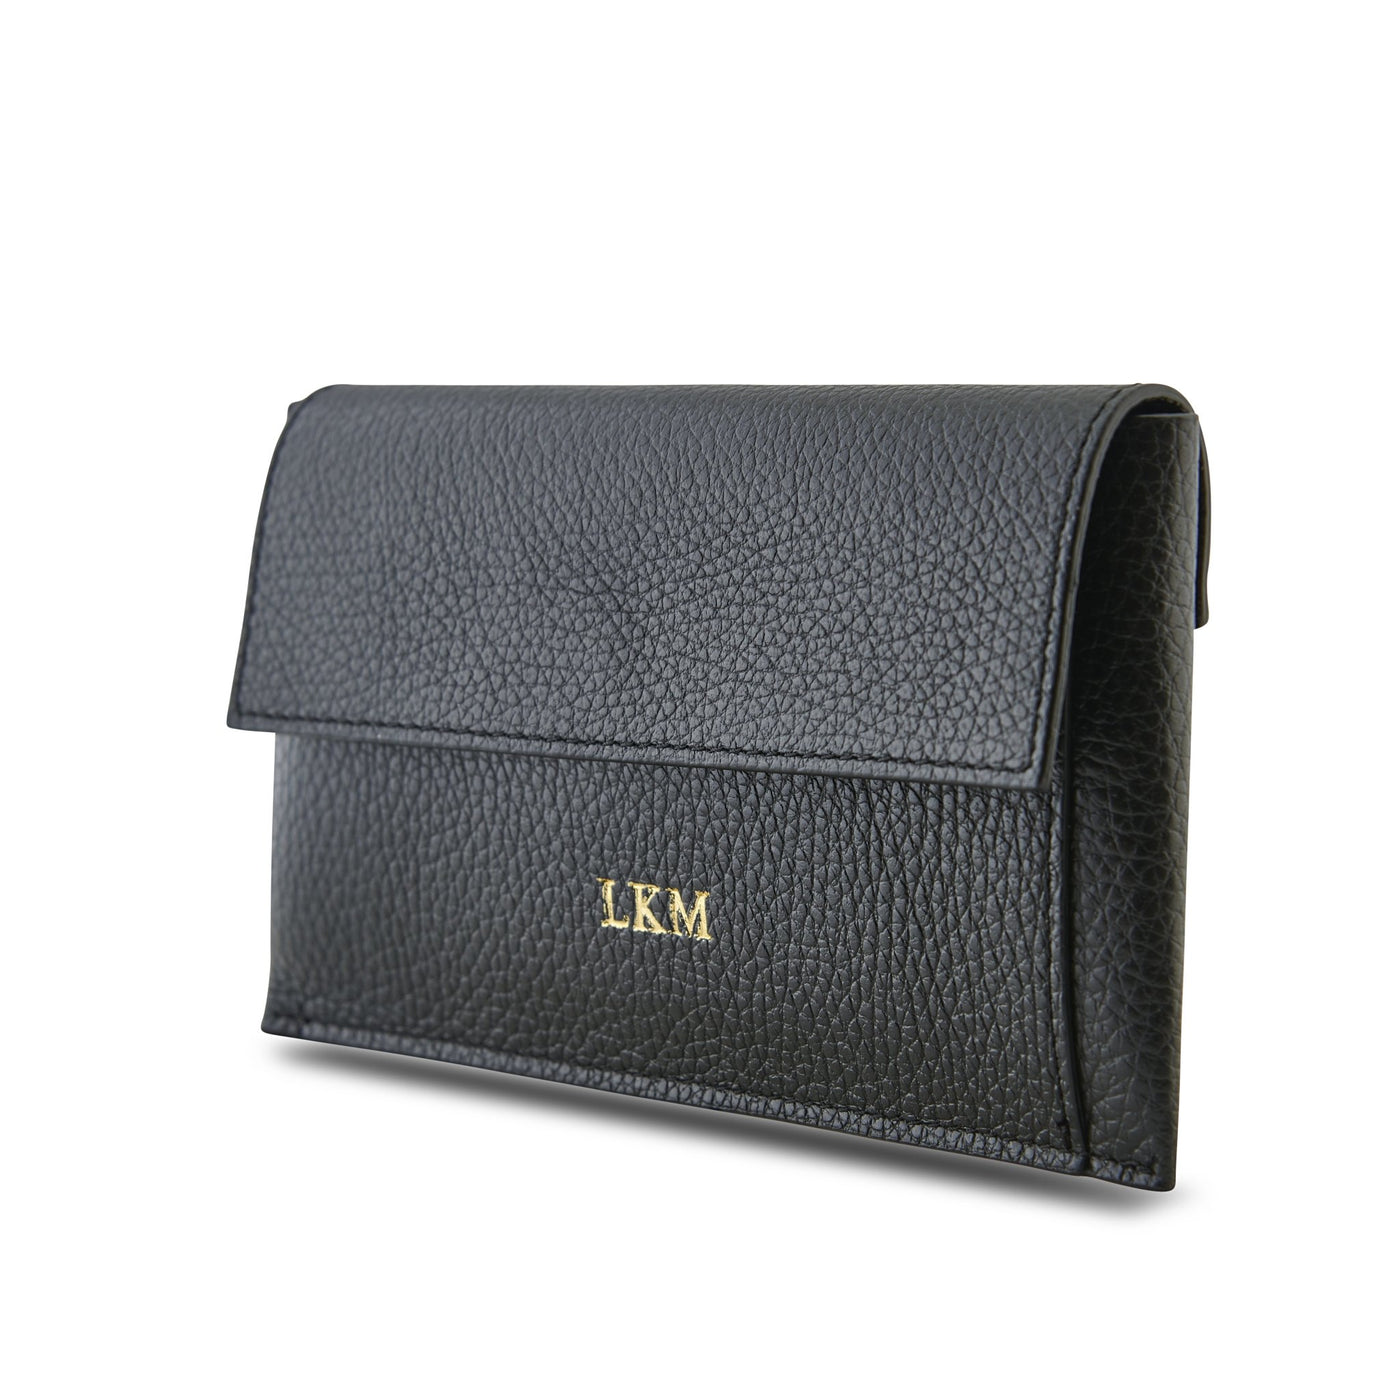 Leather Lady Wallet - LRM